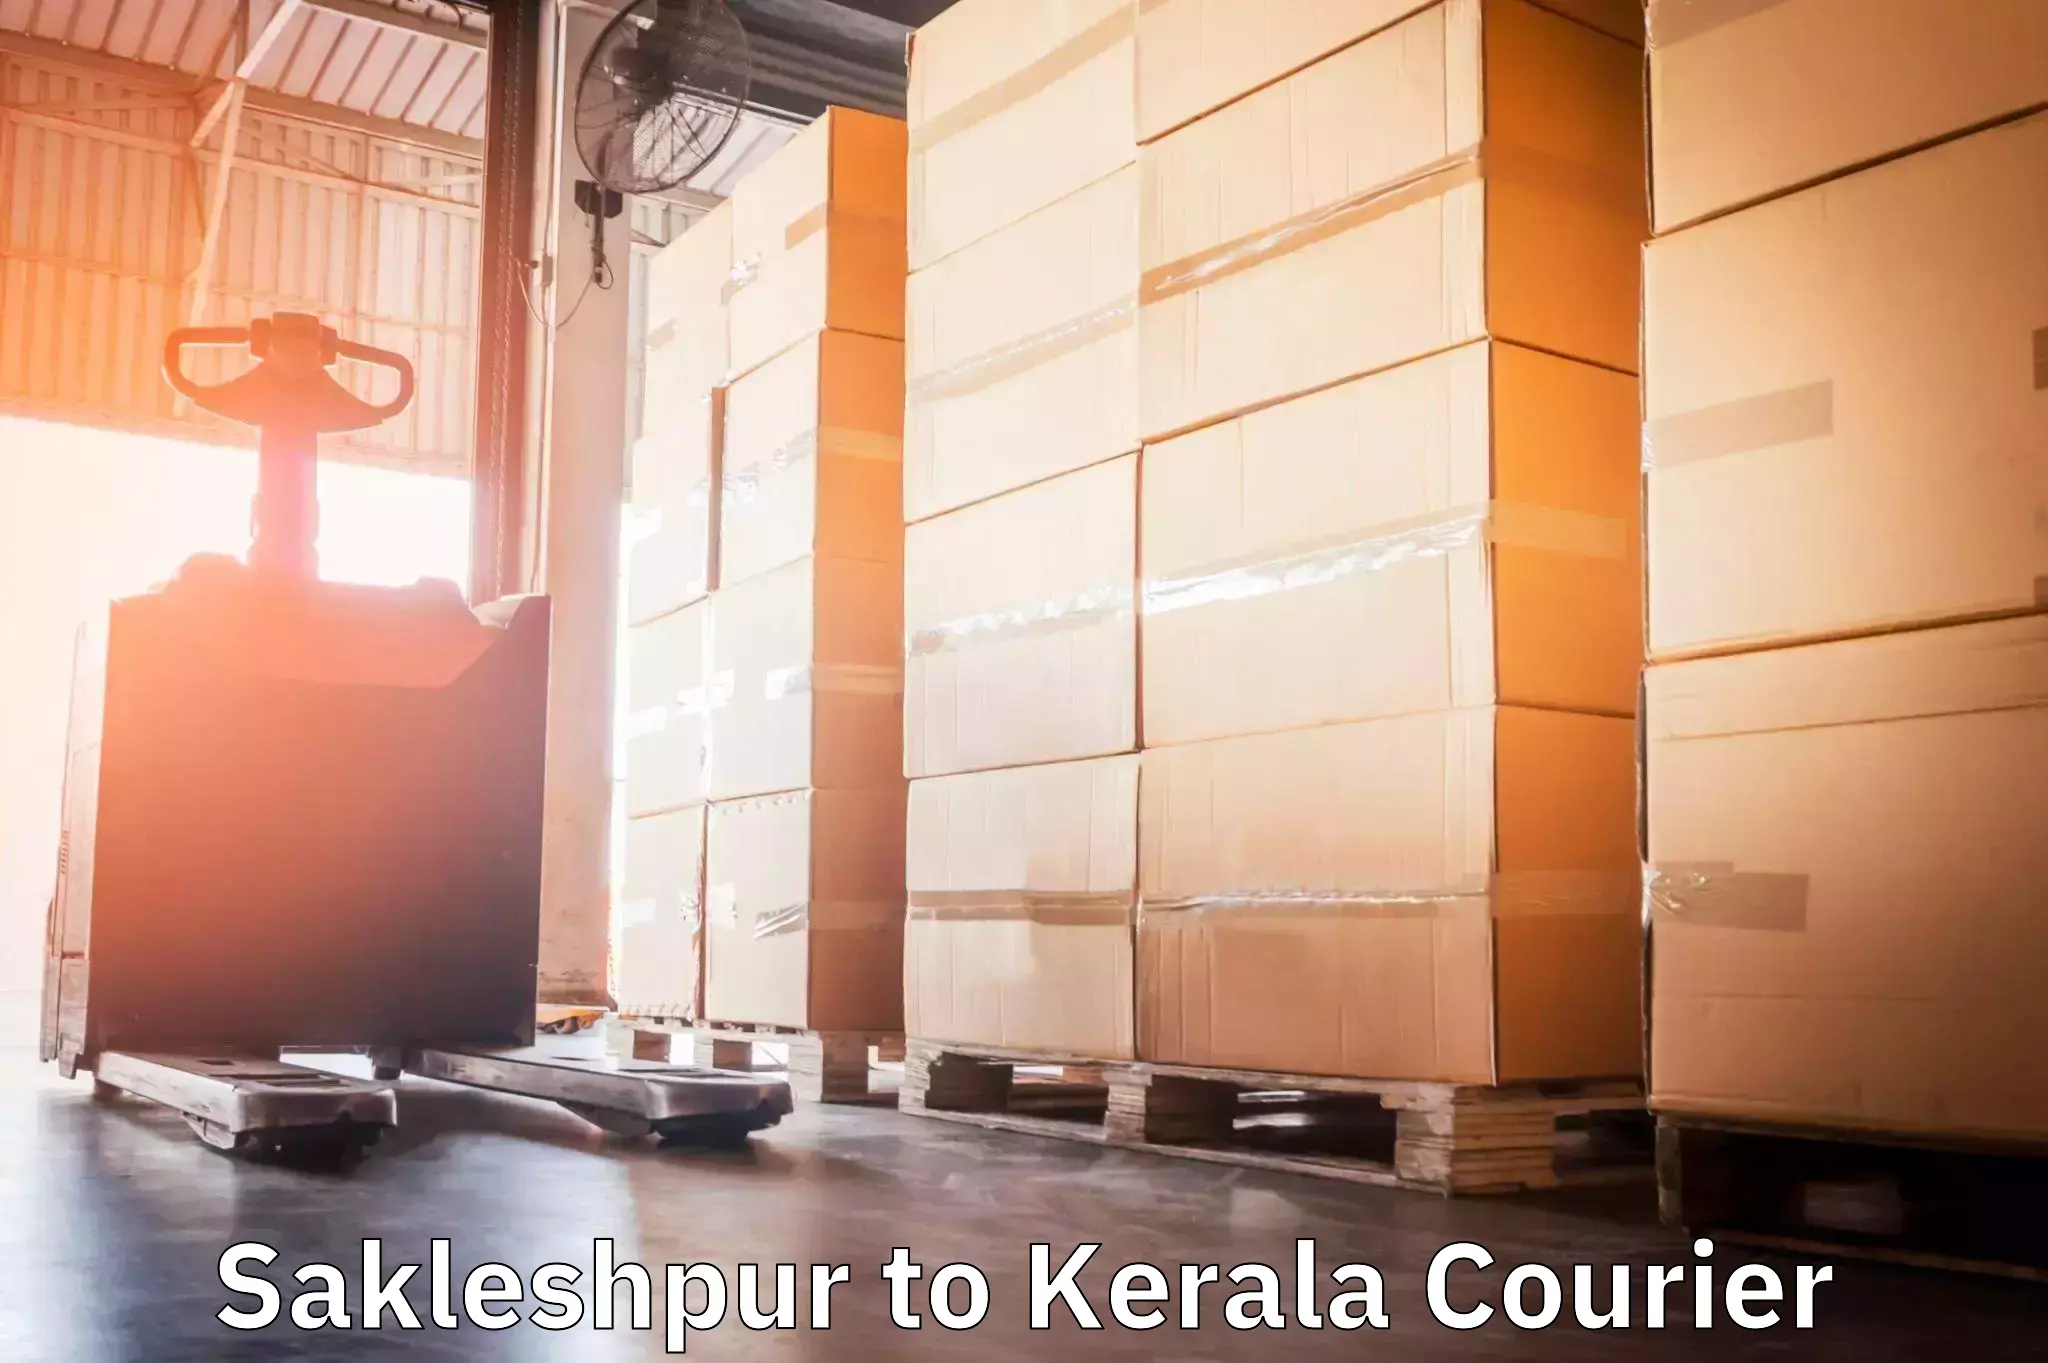 Subscription-based courier Sakleshpur to Kochi